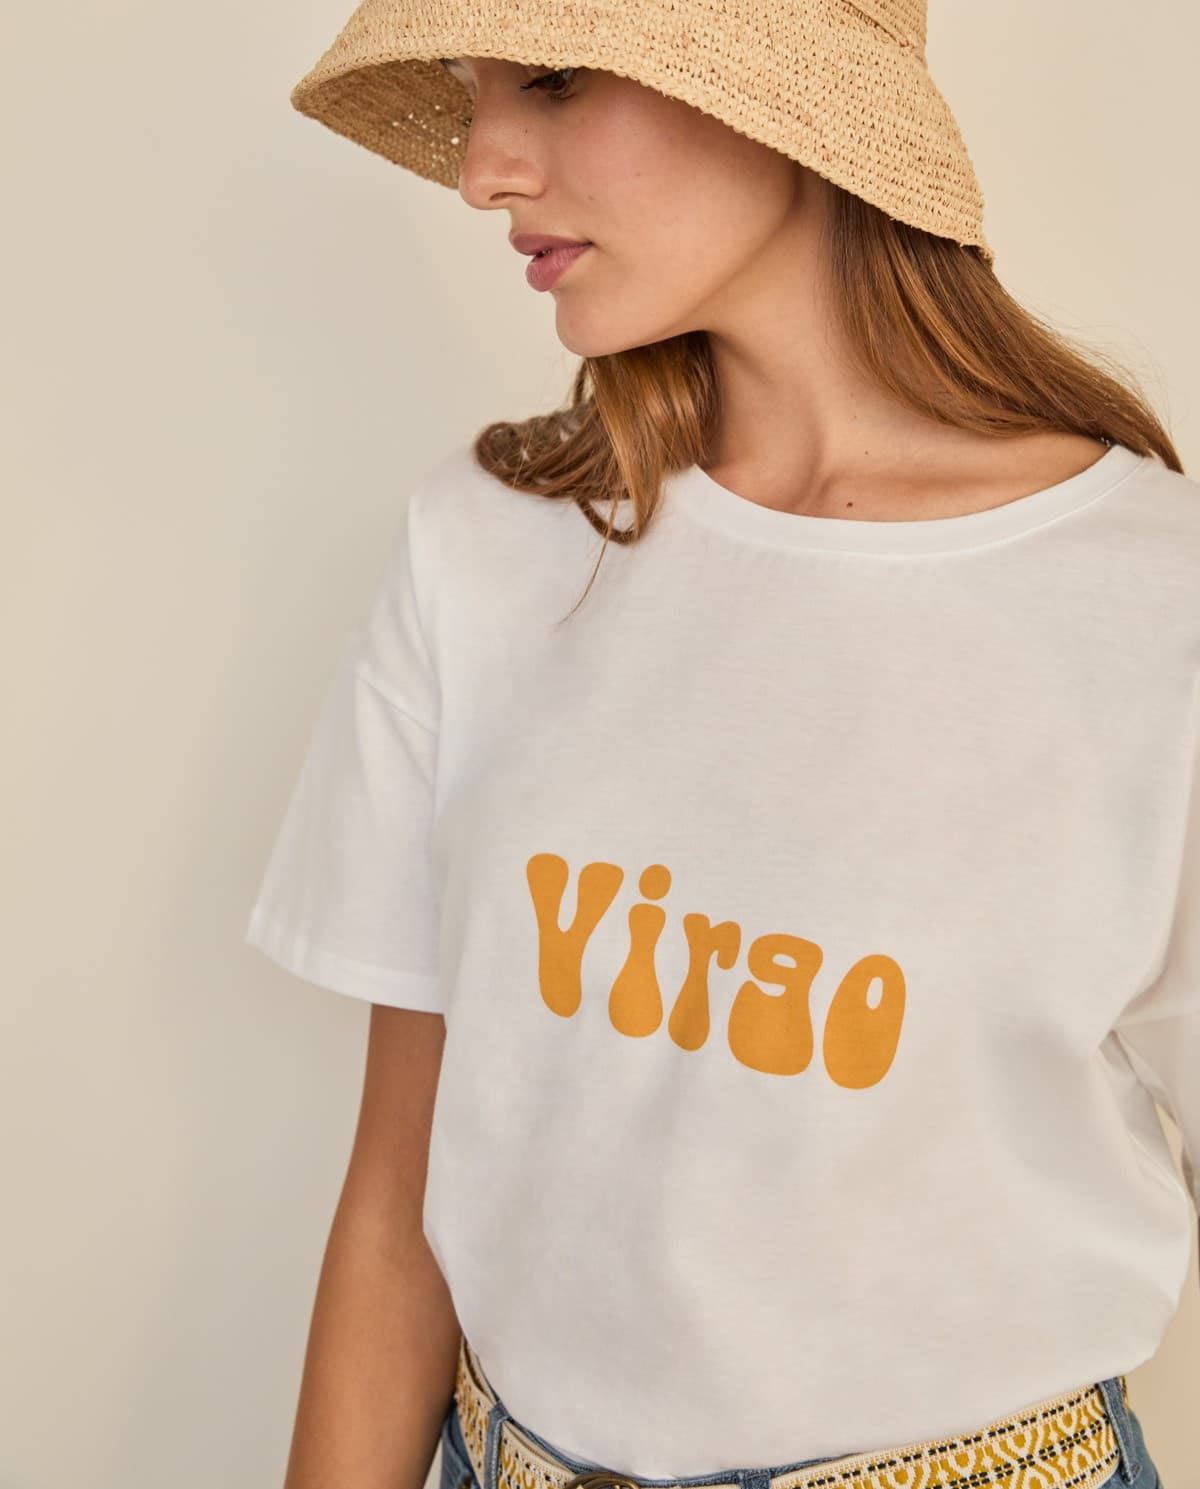 Camiseta Yerse virgo - Imagen 1